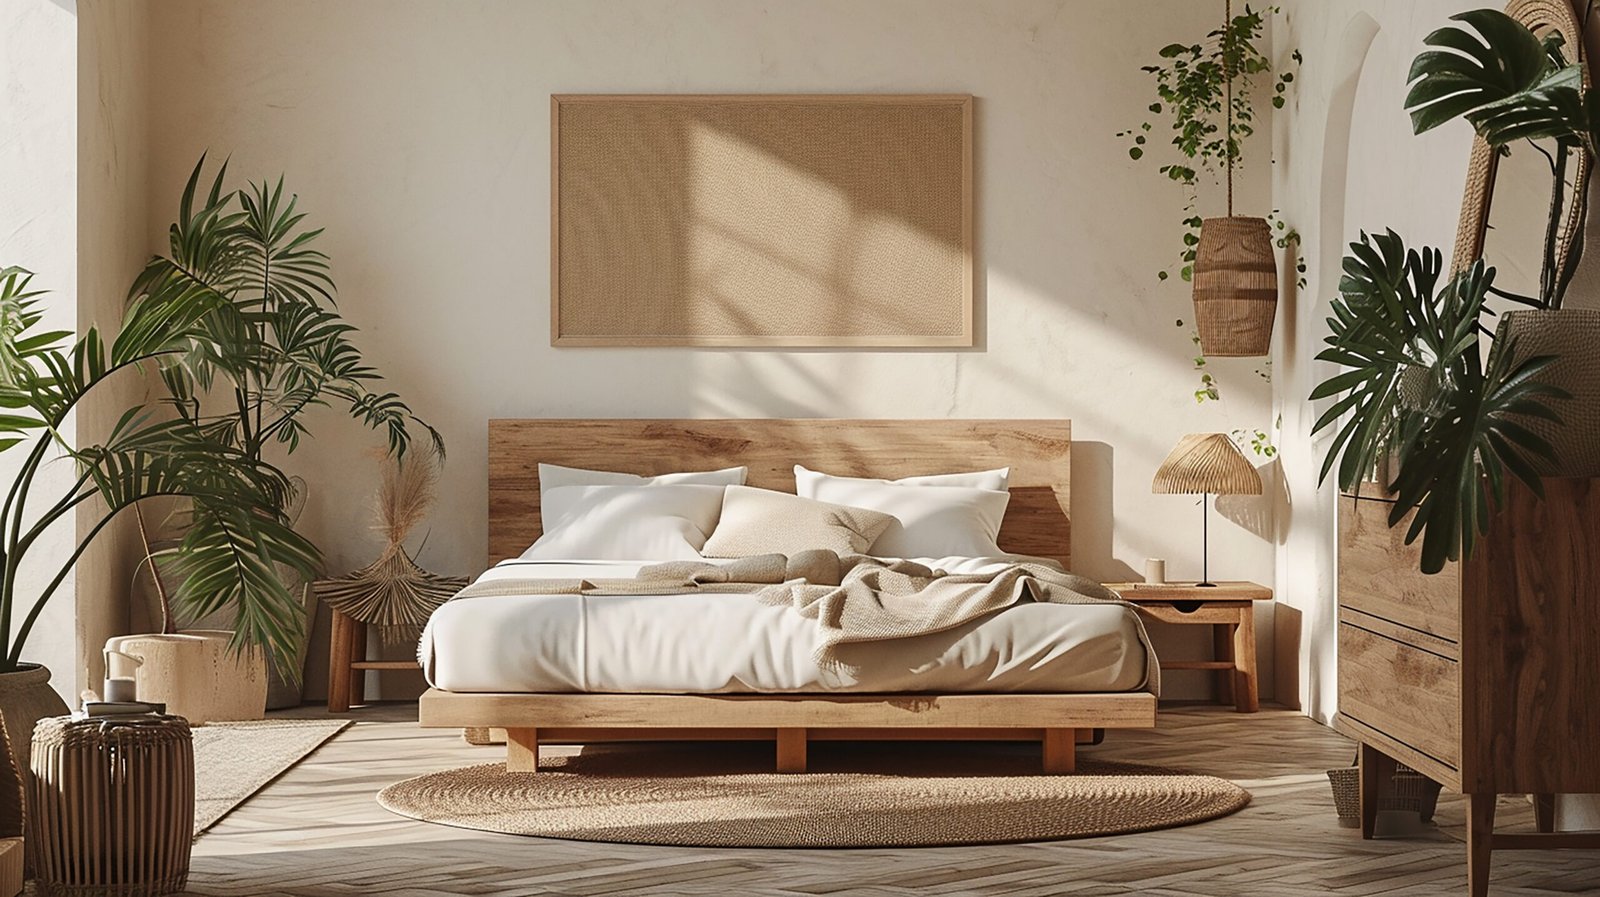 Bedroom interior design minimal aesthetic.